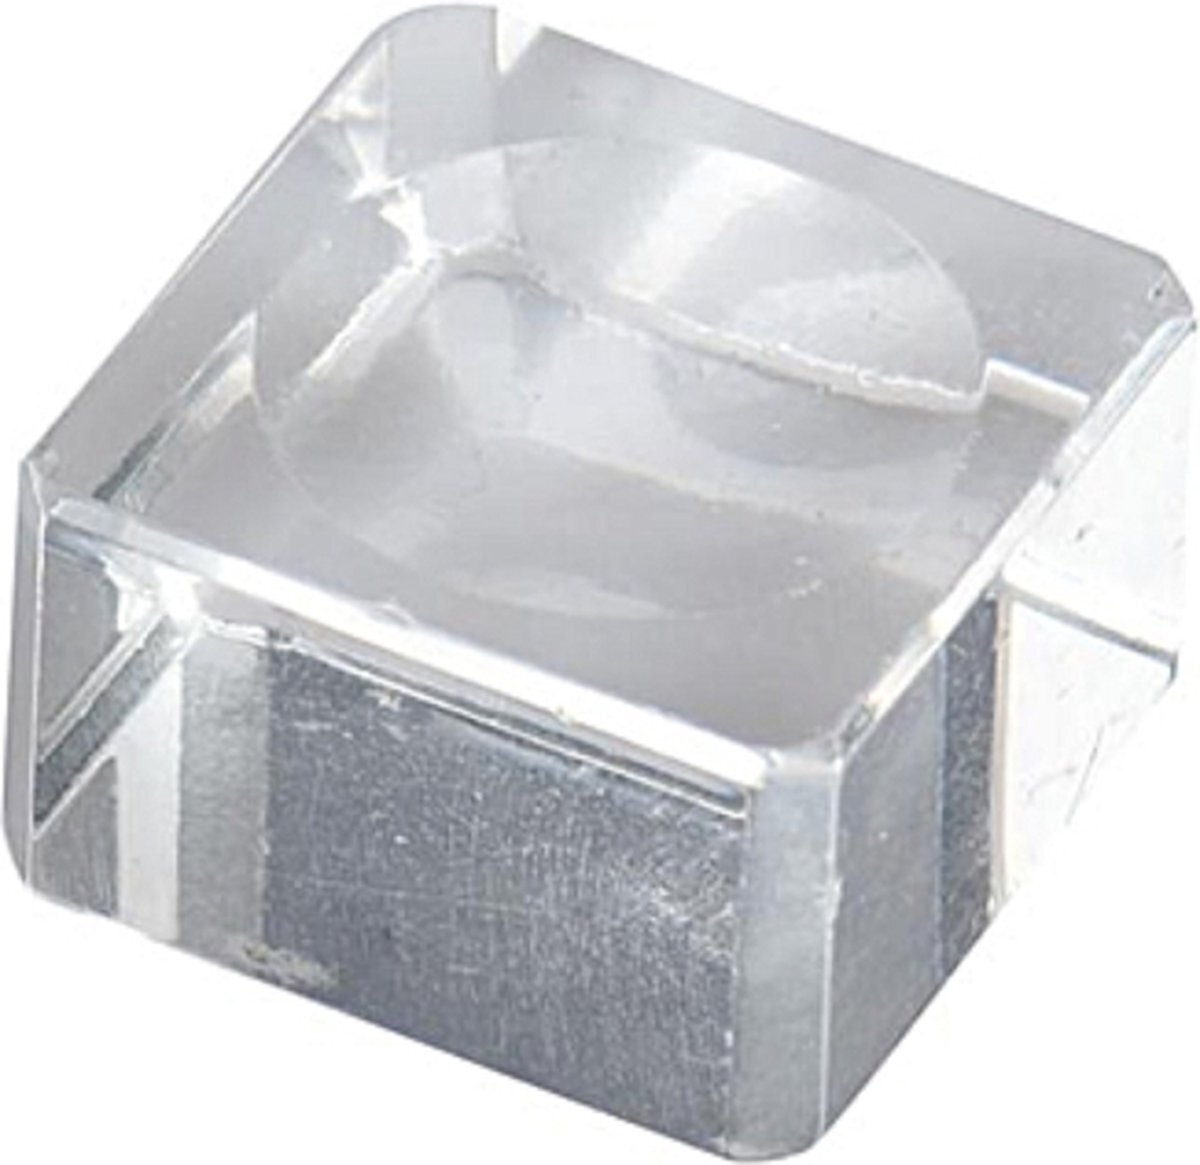 Lashsmash Crystal cube